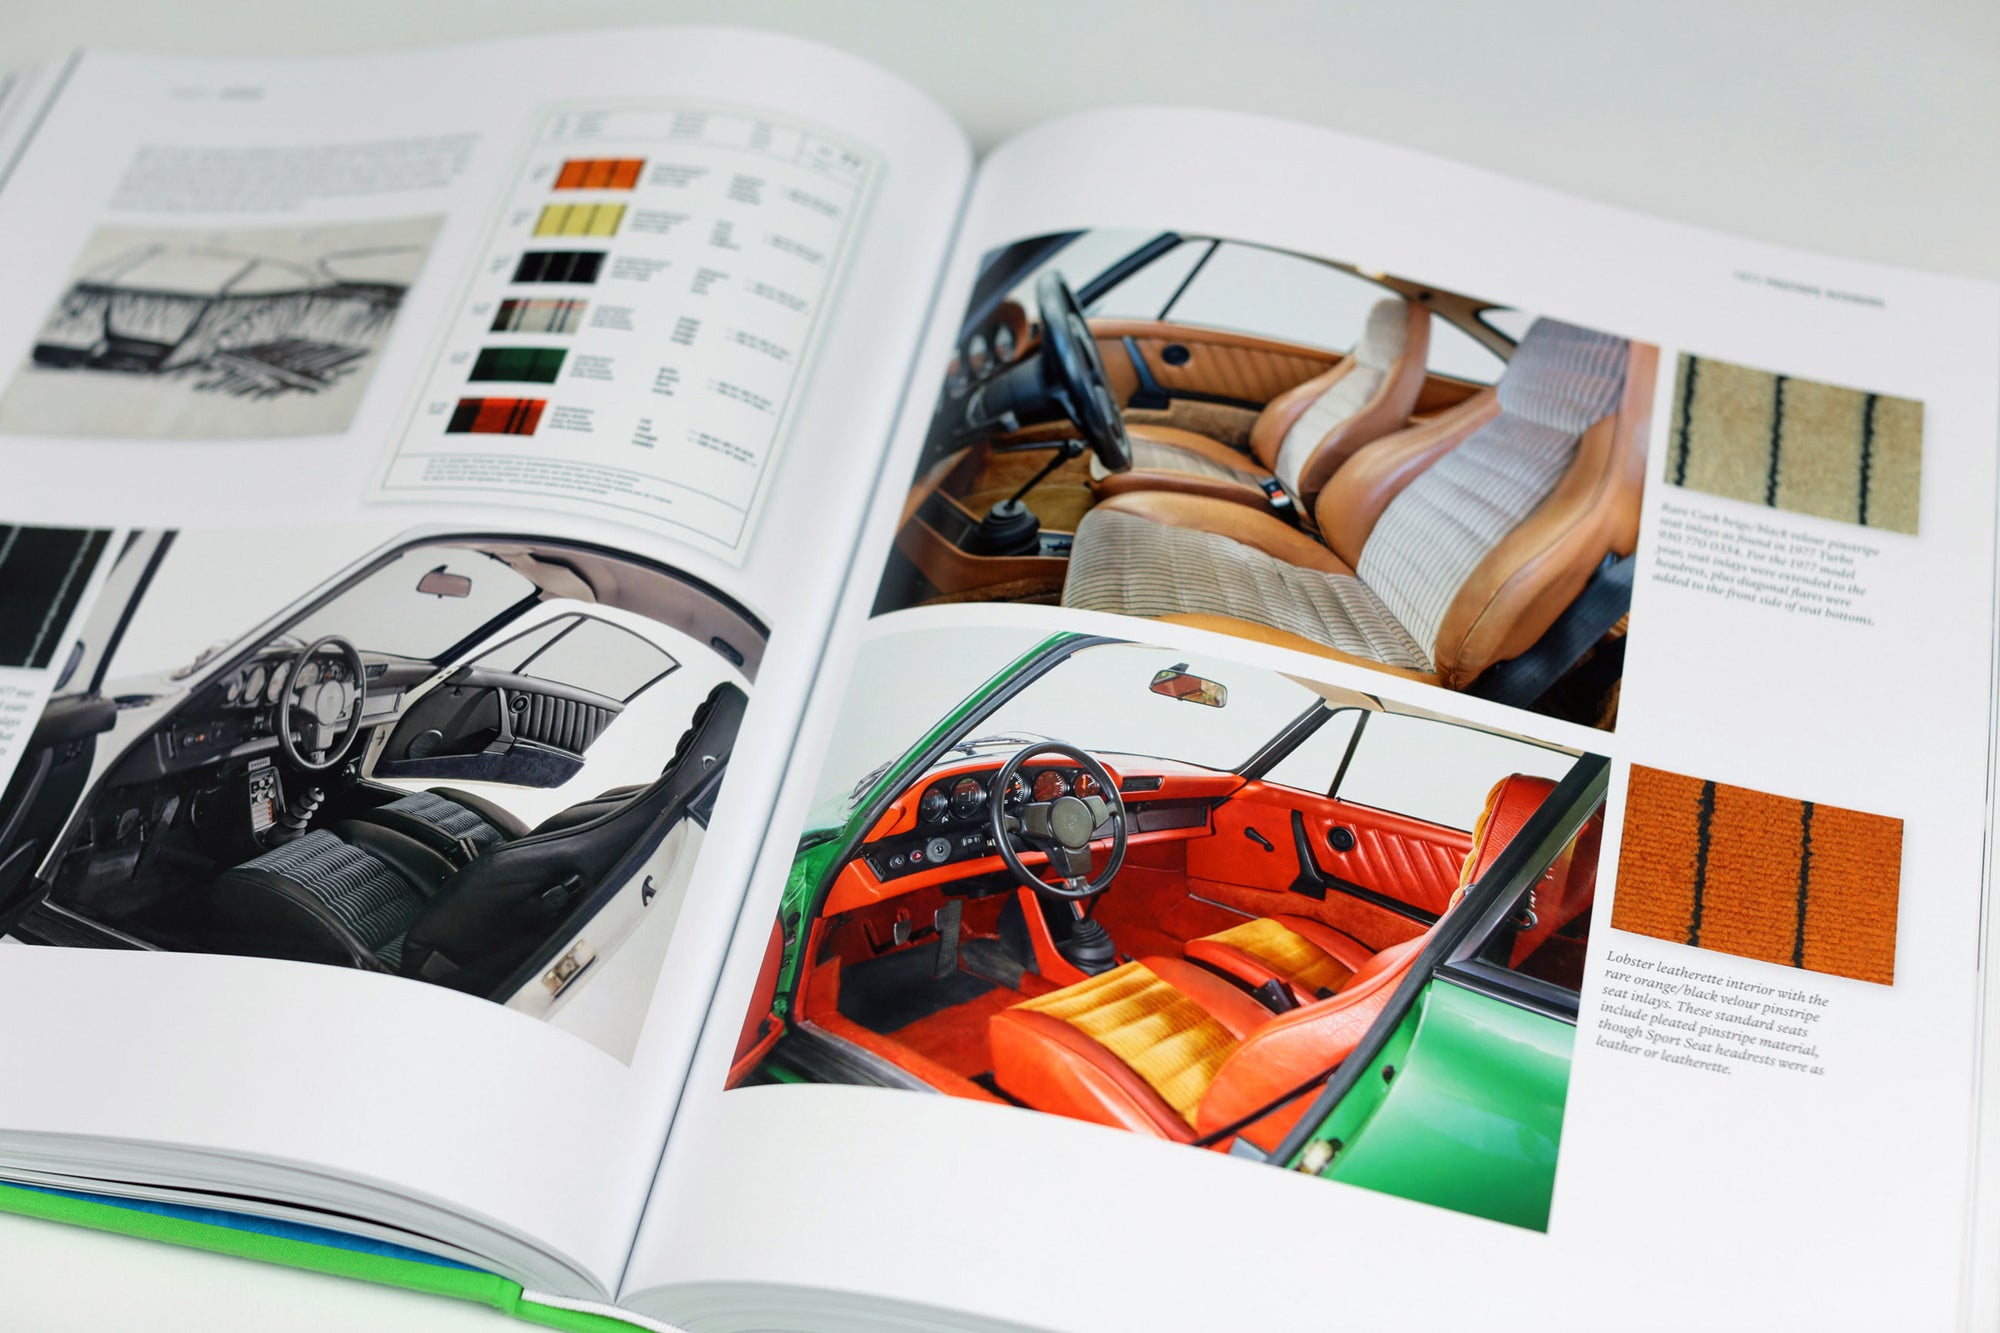  Book - Turbo 3.0 (Limited Edition) - Porsche 930